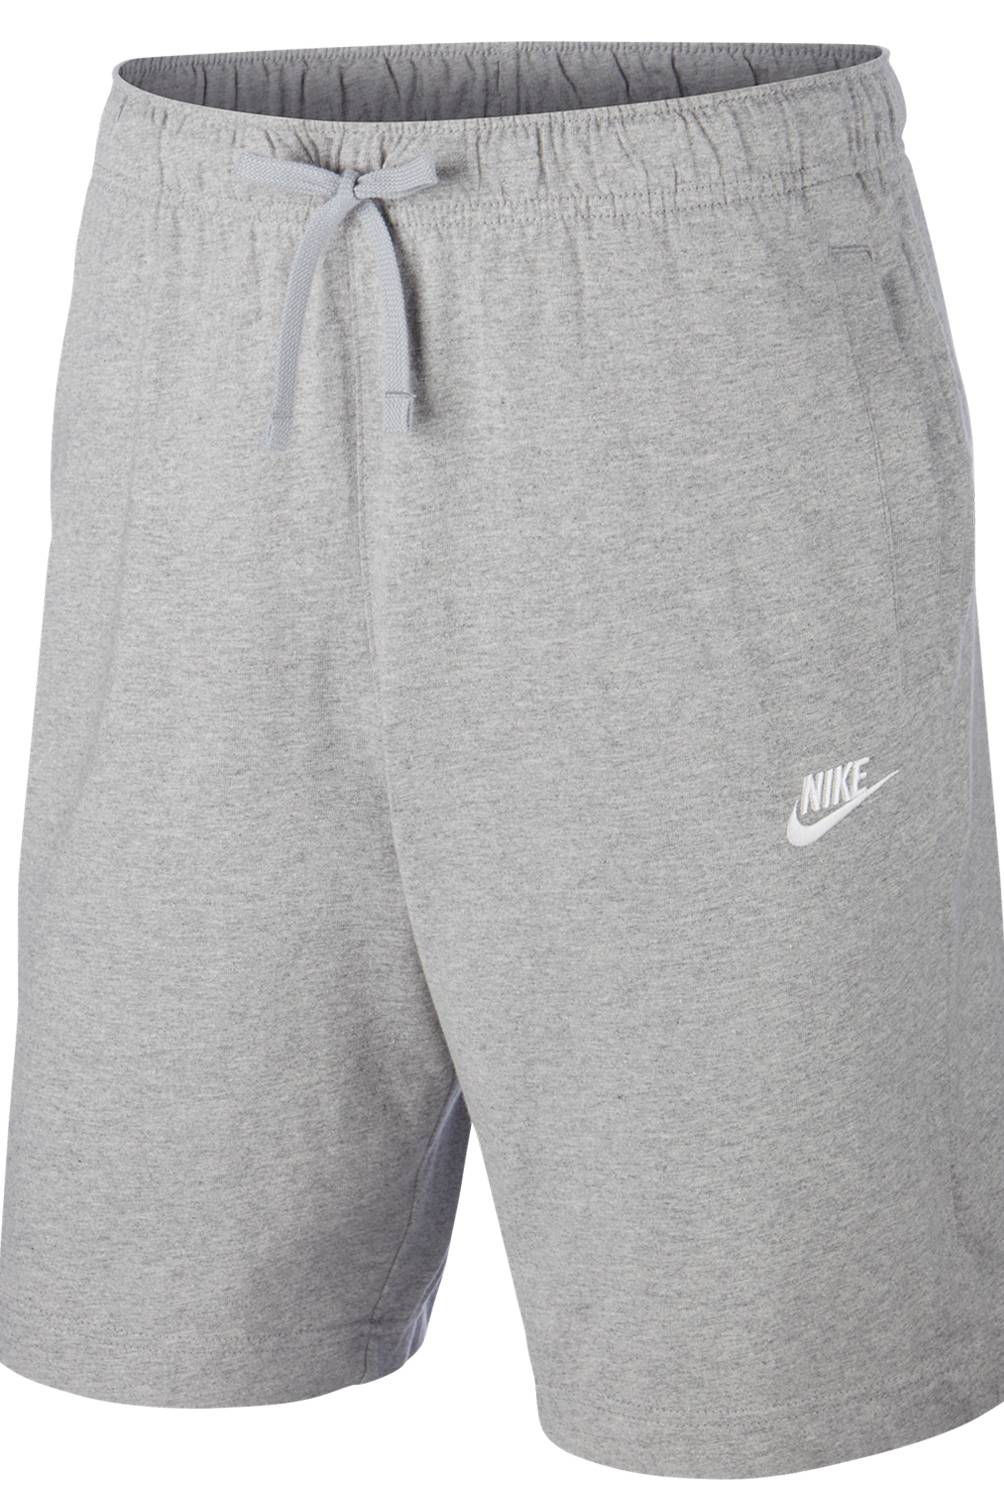 NIKE - Short Deportivo Regular Fit Hombre Nike